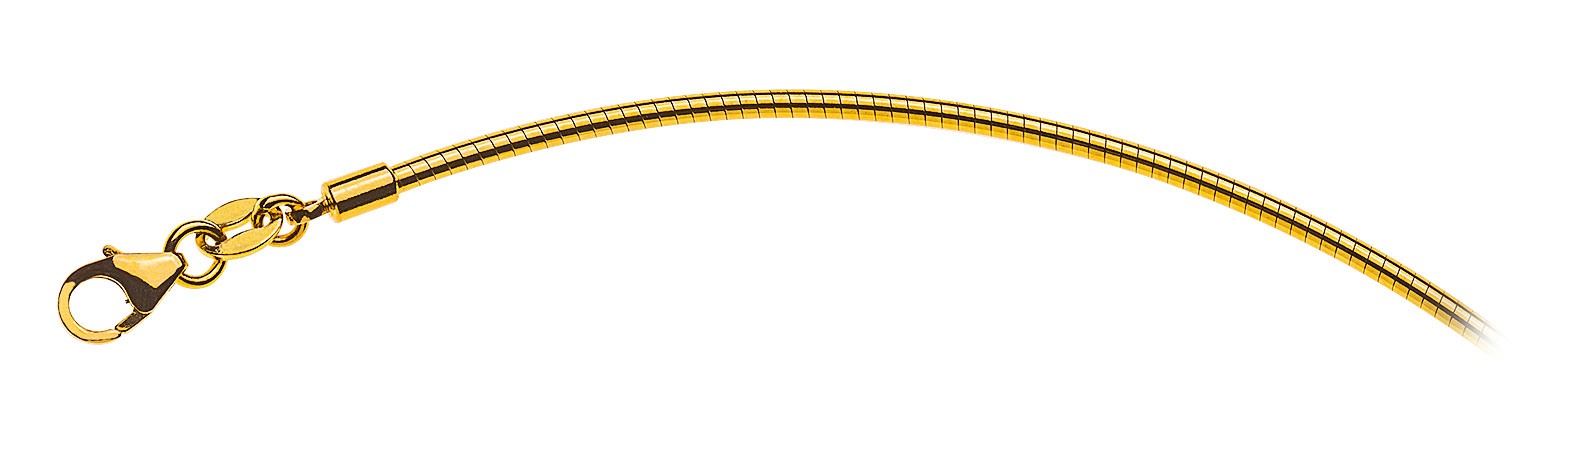 AURONOS Prestige Necklace yellow gold 18K omega chain 40cm 1.8mm